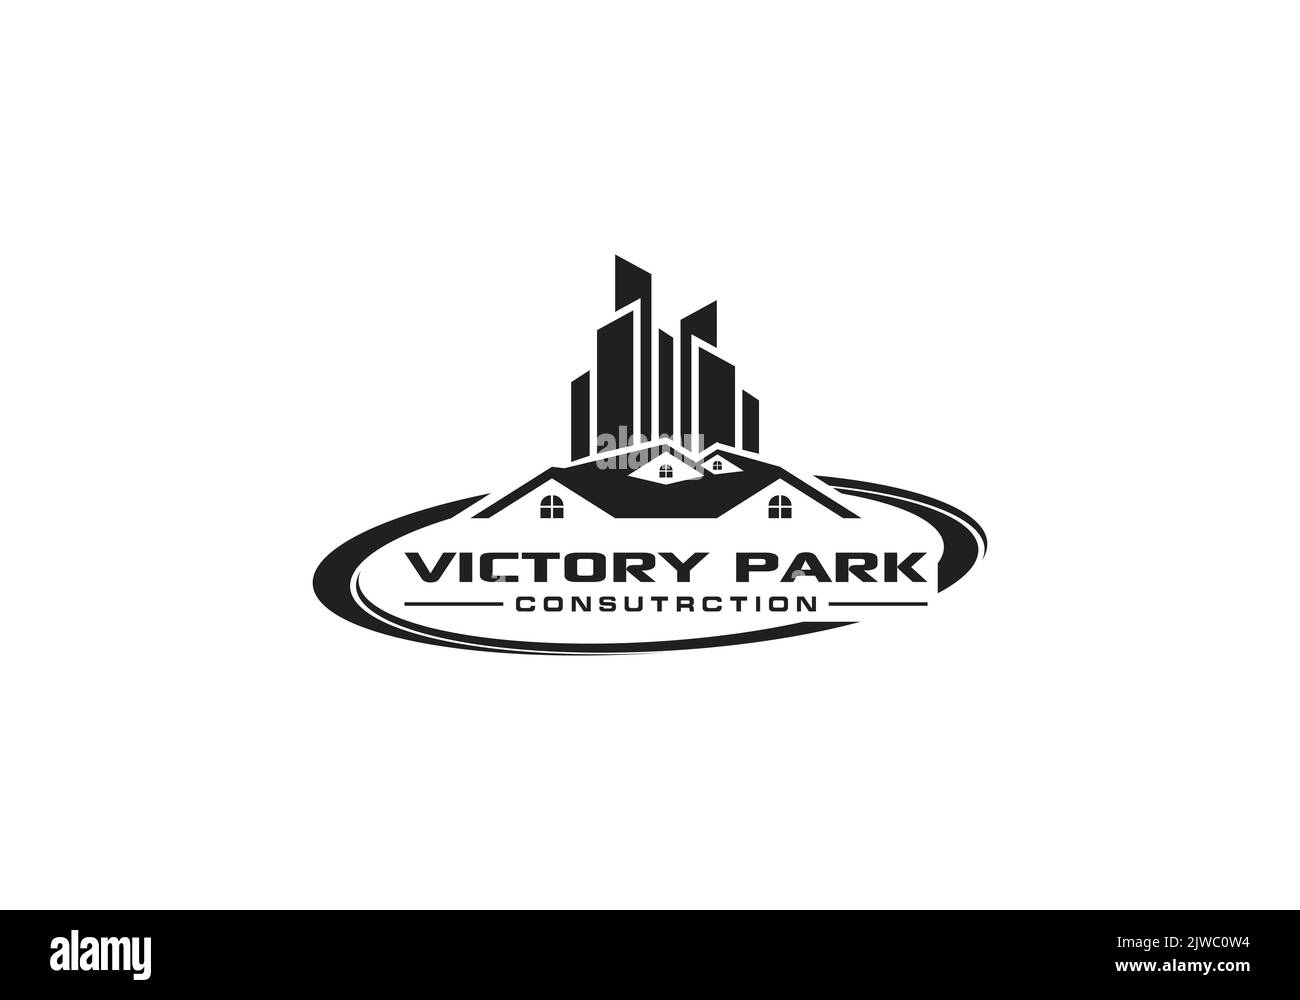 Victory Park Construction Realty Real Estate Logo Design Stock Vektor